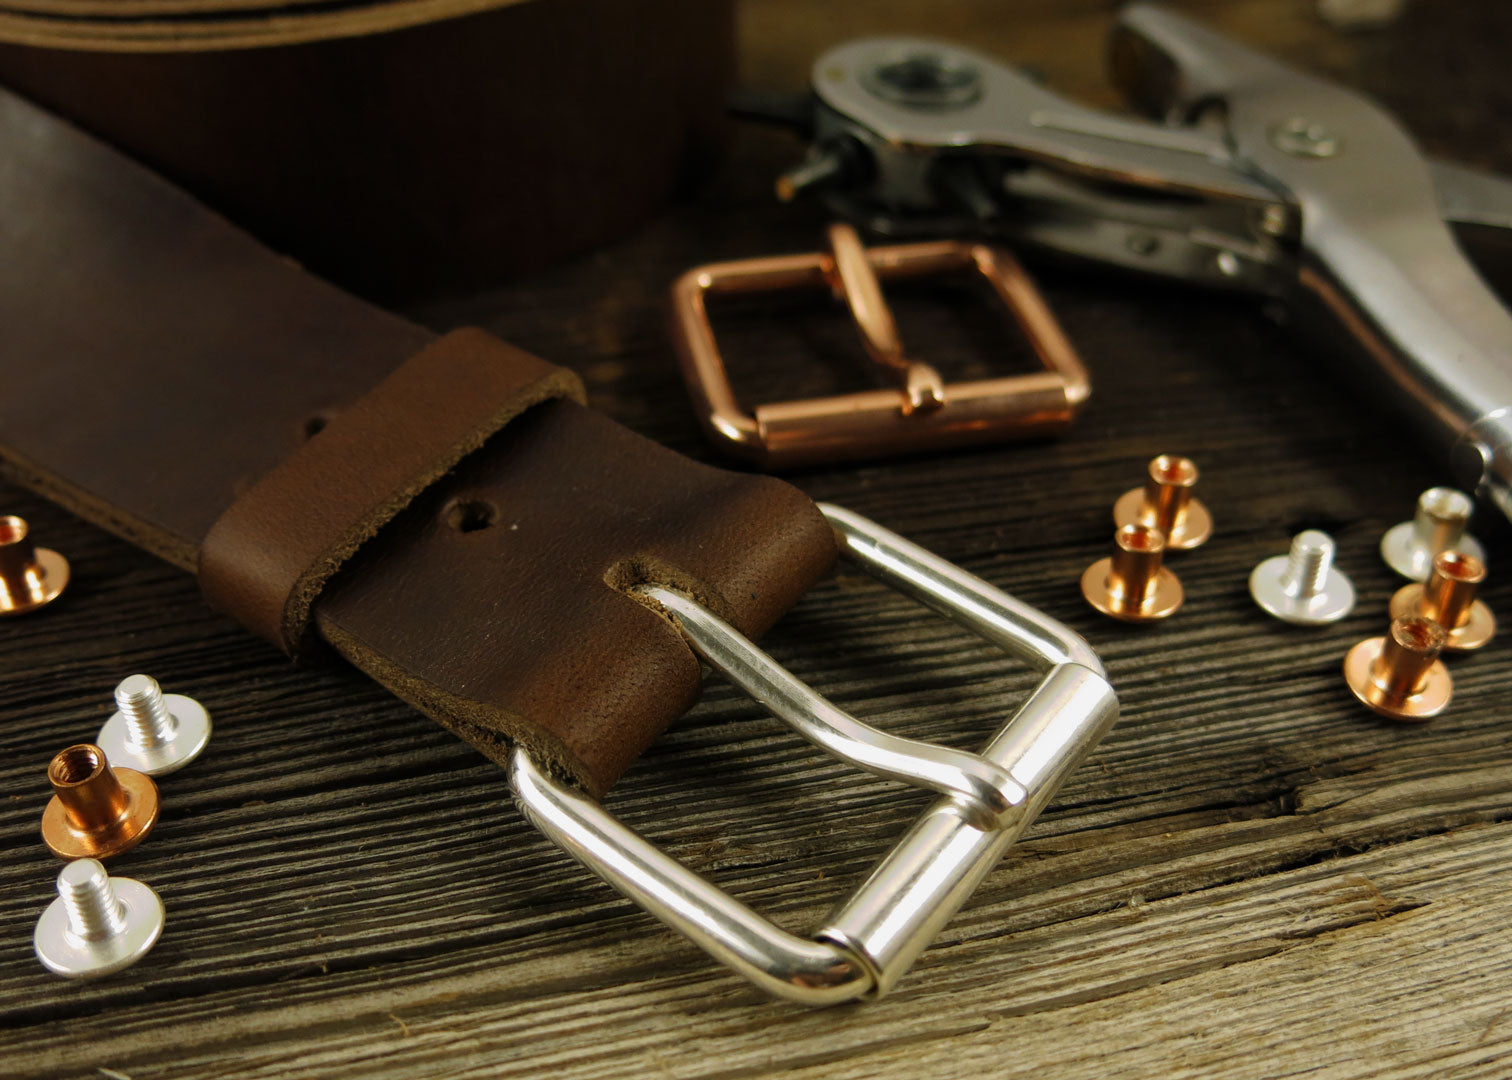 Custom Belt Buckles - Mens Leather Belts Metal Some Art Oval / Copper